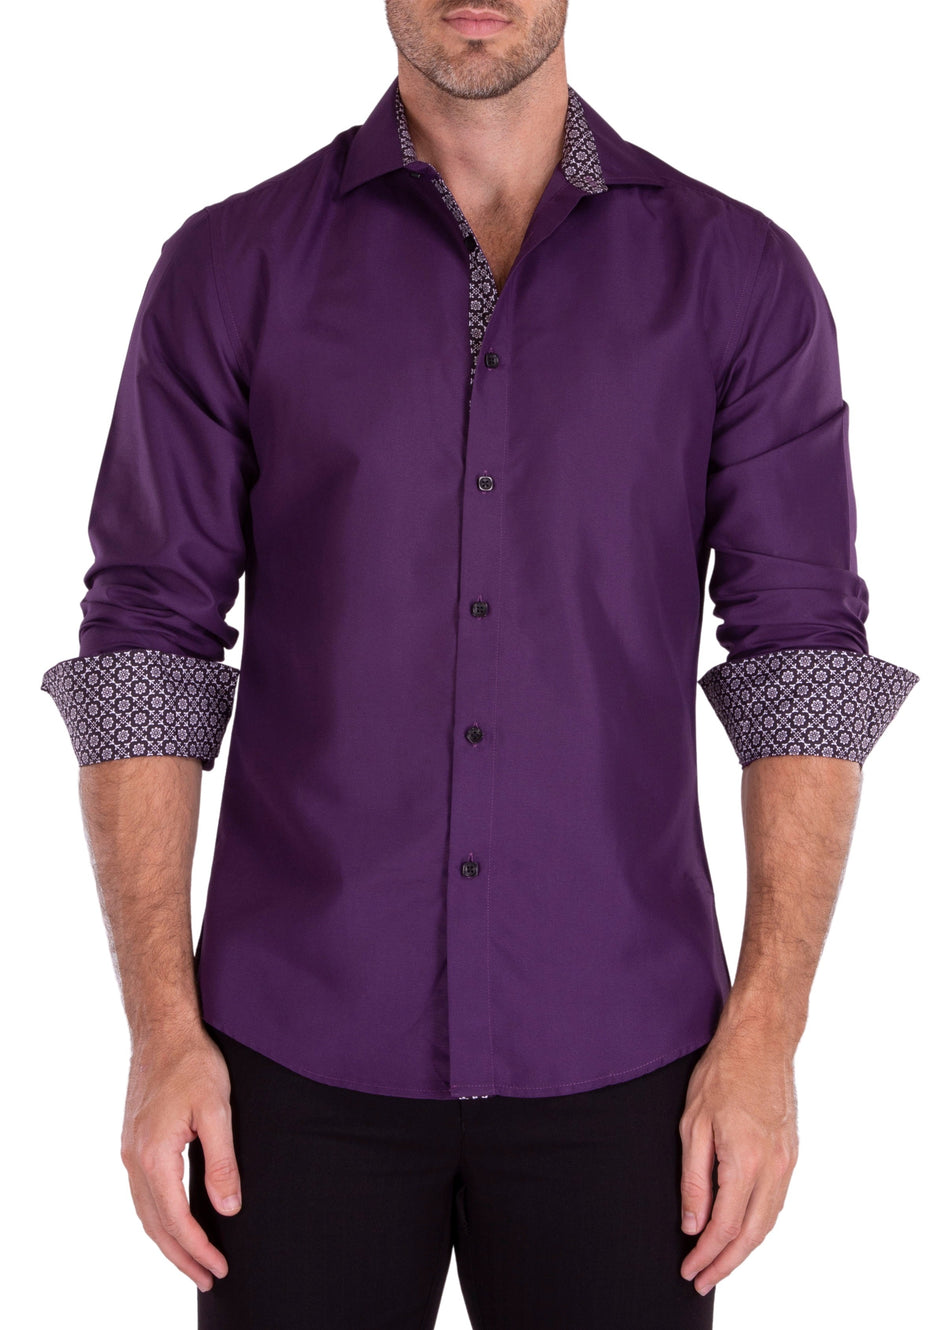 212393 - Purple Long Sleeve Shirt